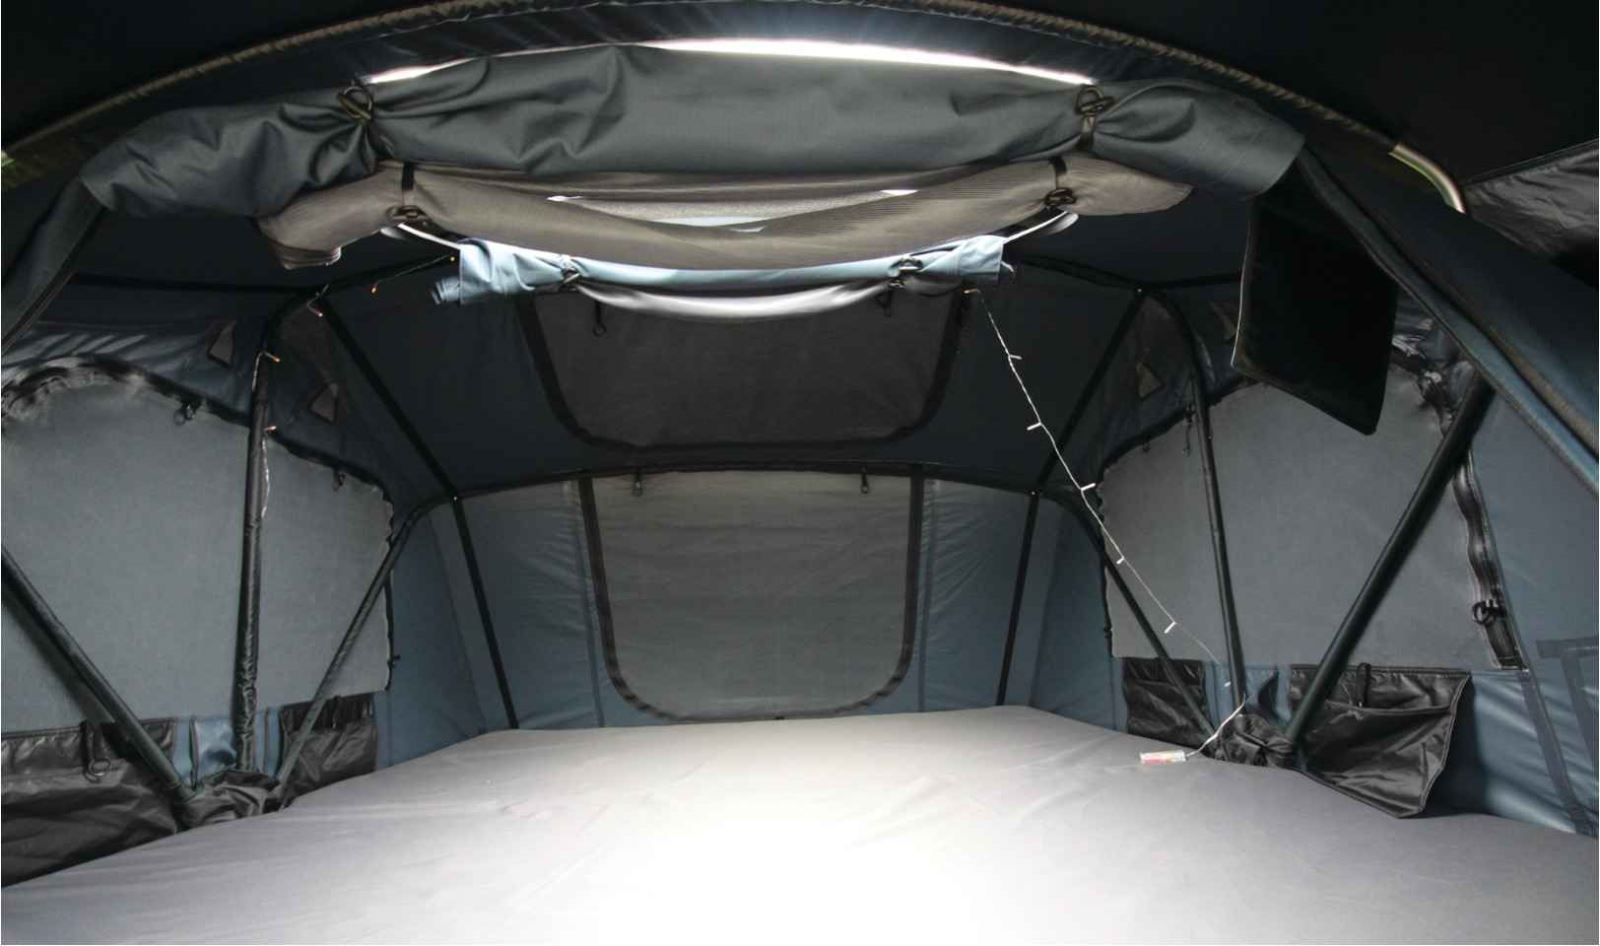 Inside the Tentbox Lite XL